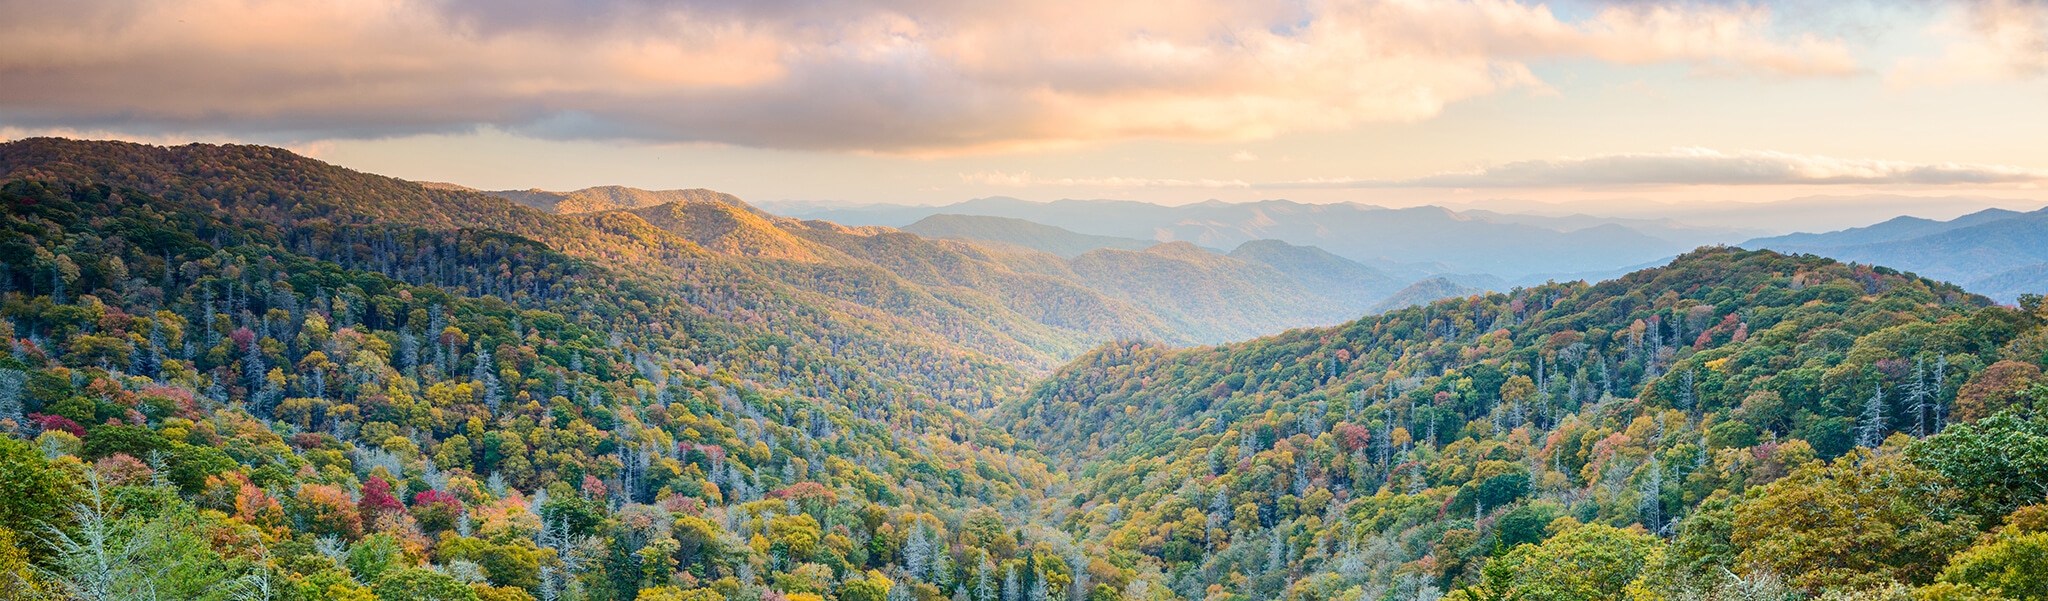 image of the Smoky Mountains